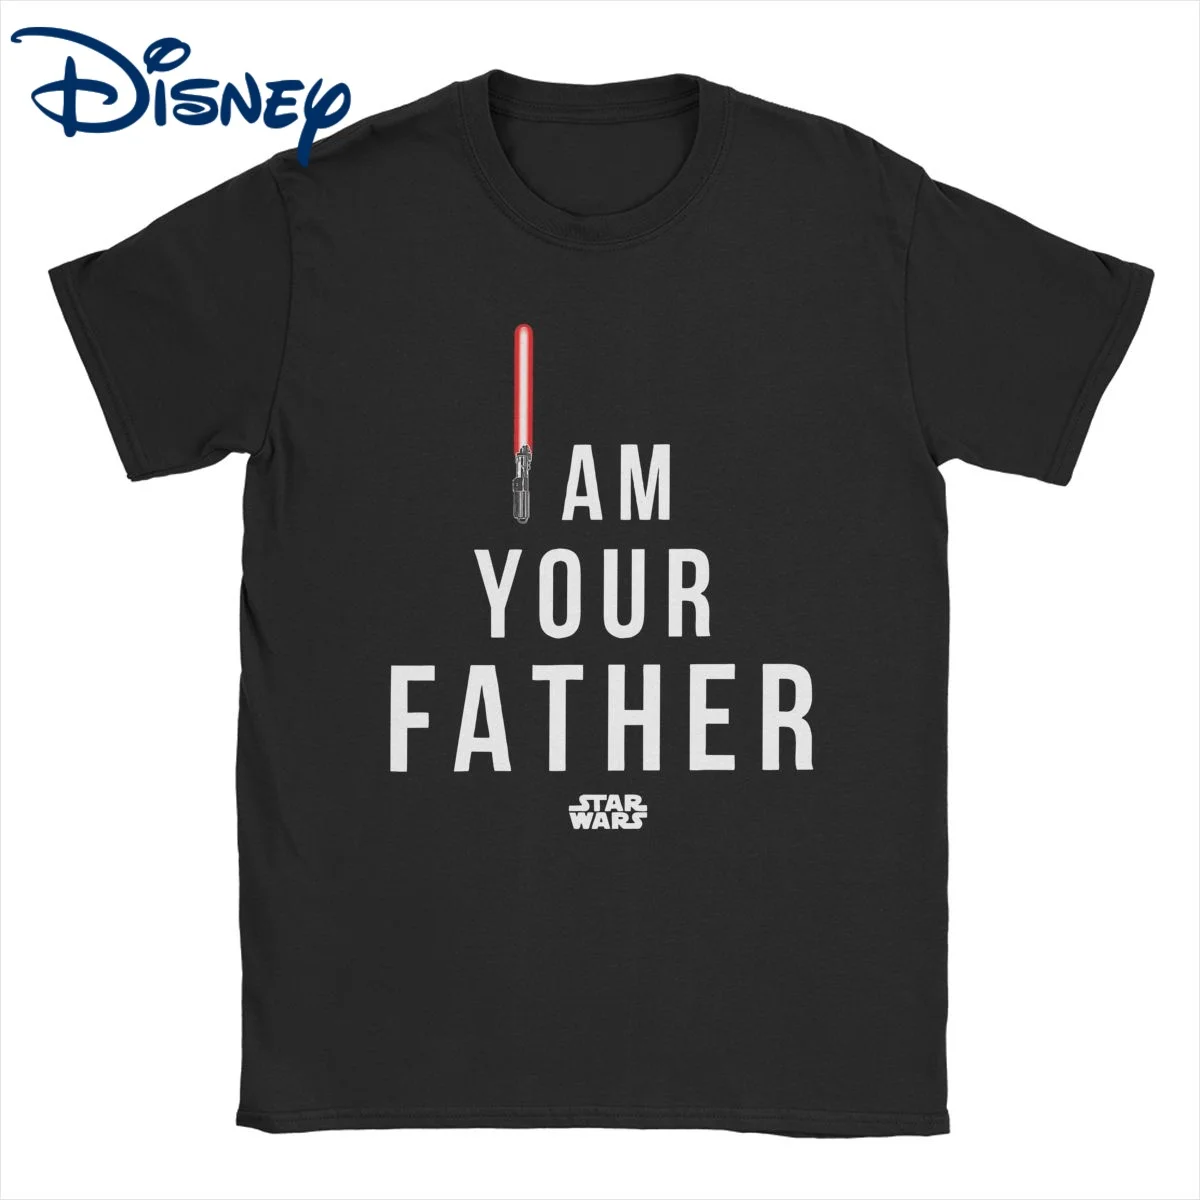 

Marvel Disney Star Wars T-Shirt Men Women's Cotton T Shirt I Am Your Father Short Sleeve Tee Shirt Gift Idea Clothing